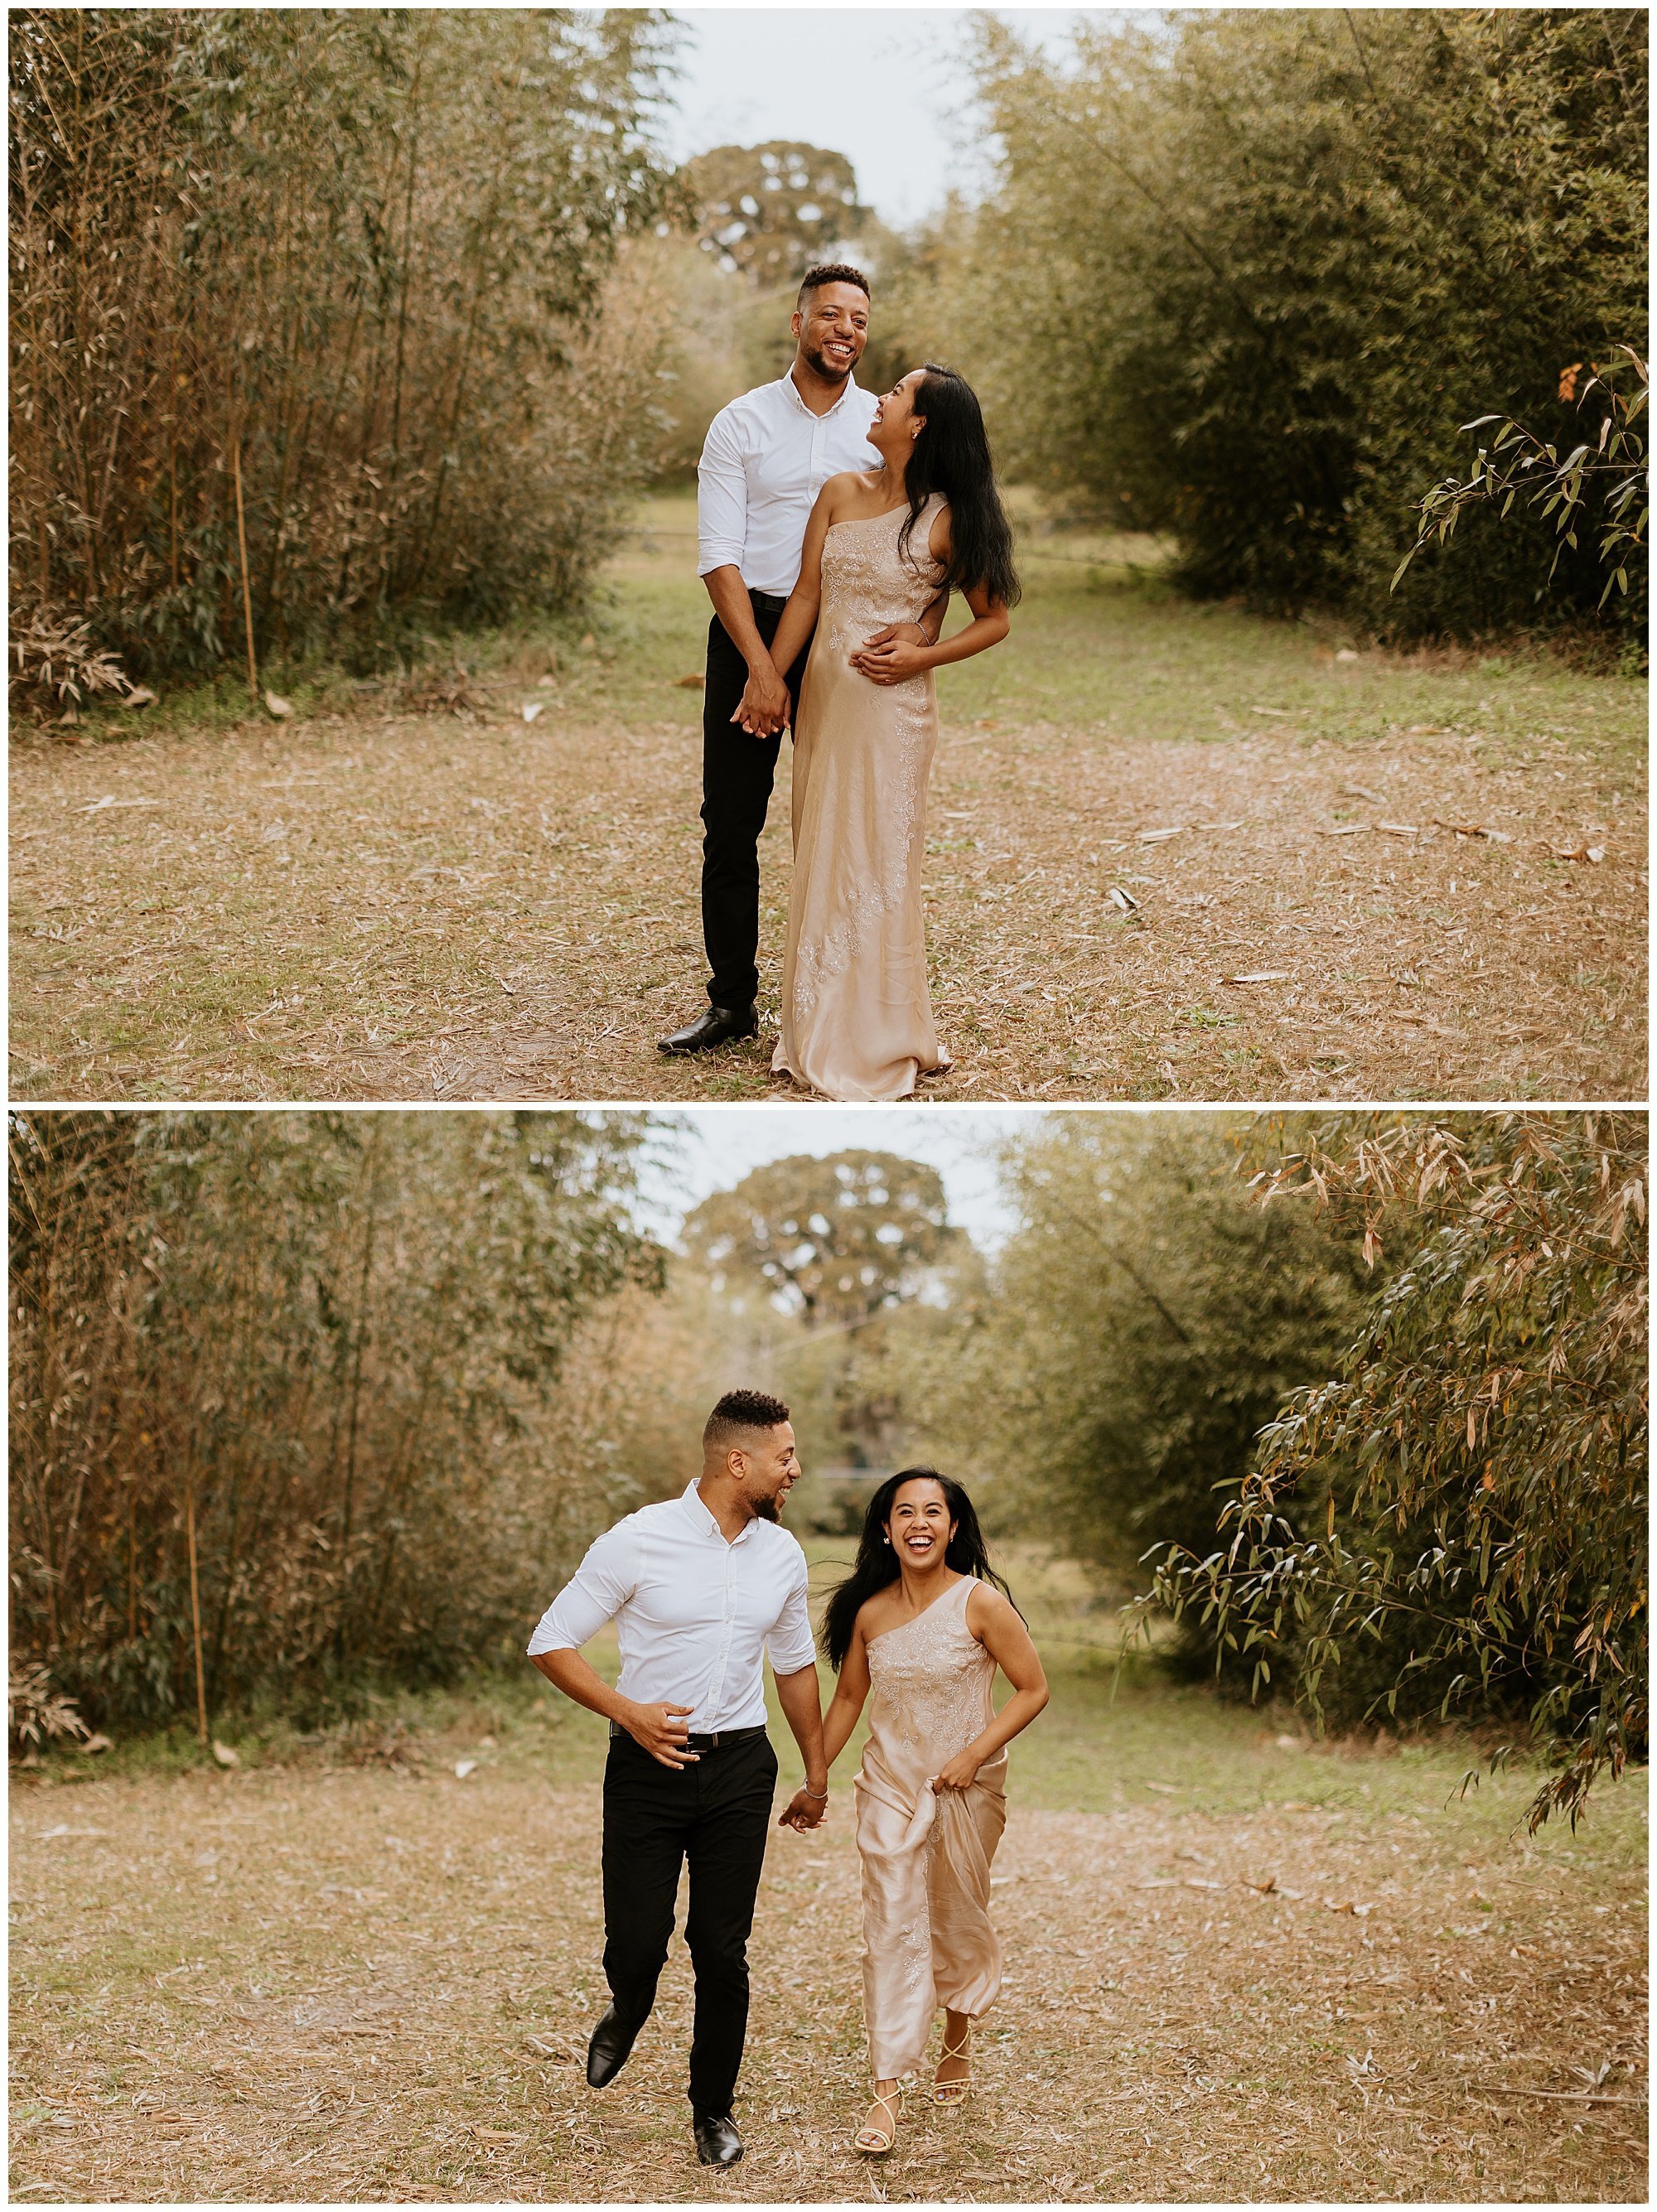 Savannah Engagement, Palm tree in Engagement, Georgia Wedding/Engagement Photographer